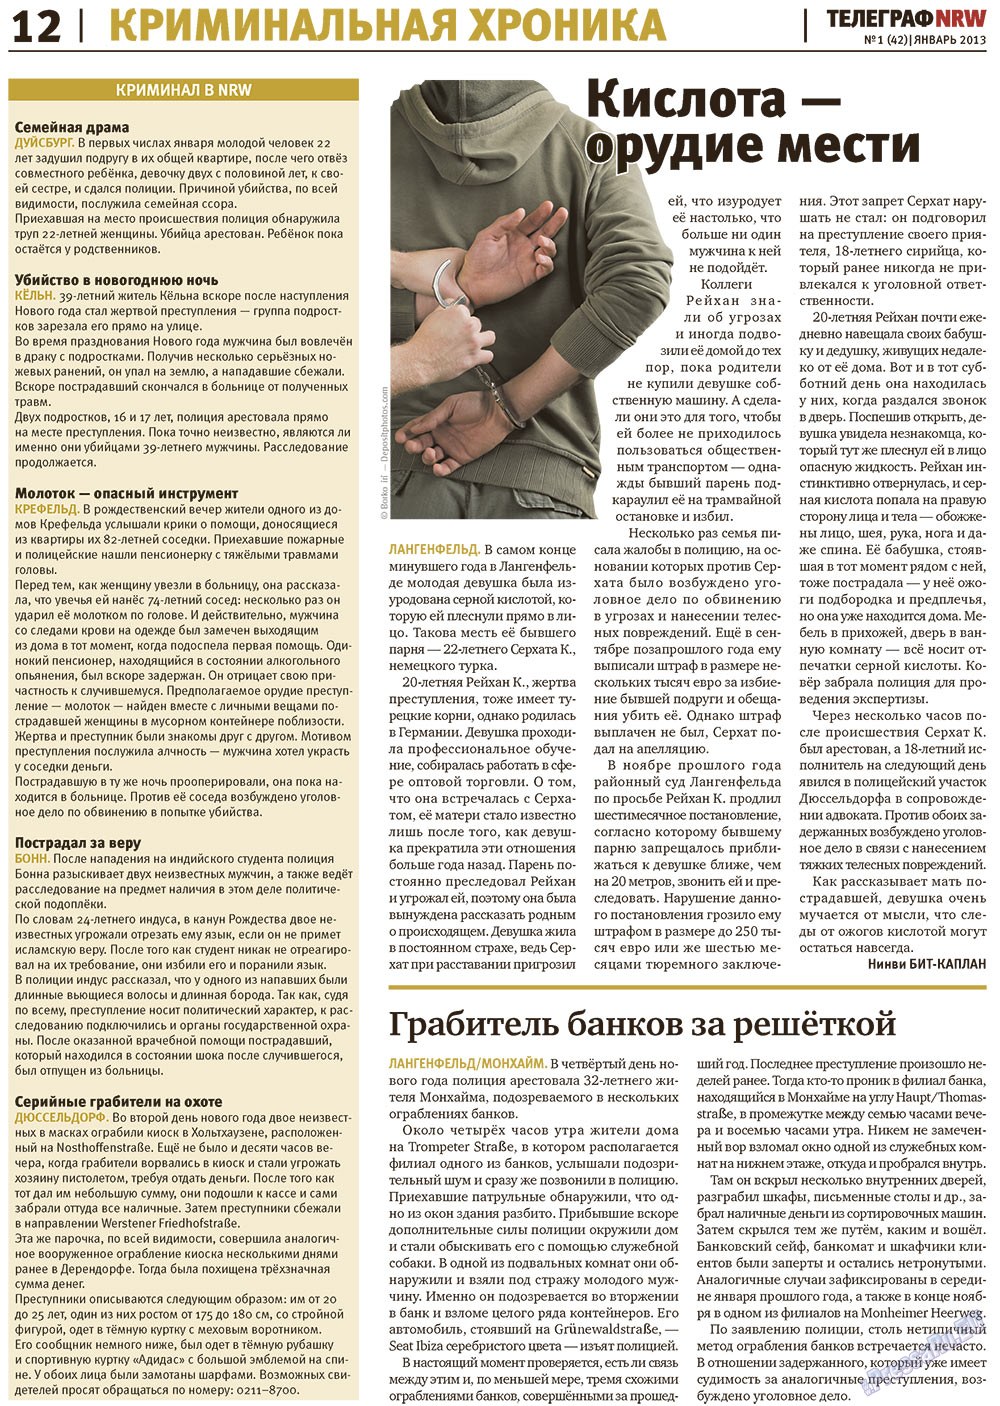 Телеграф NRW, газета. 2013 №1 стр.12